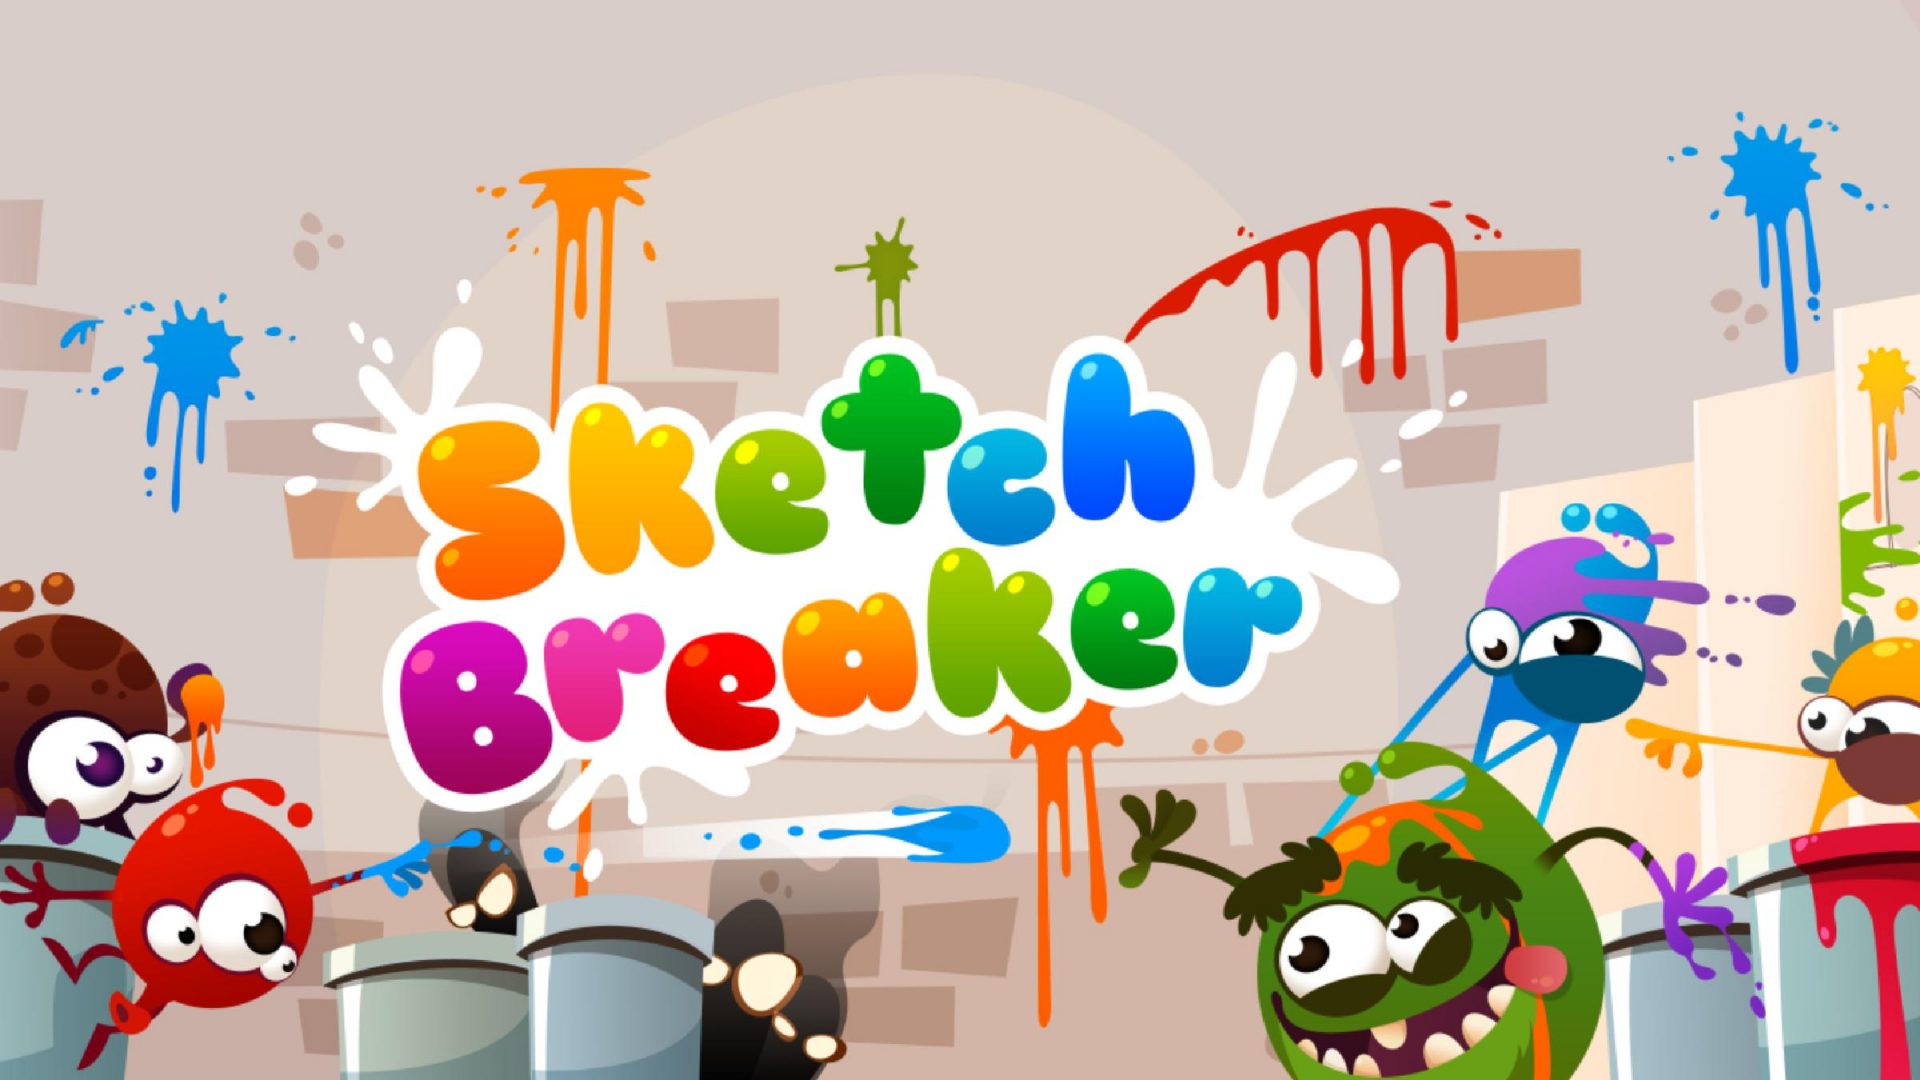 Sketch Breaker